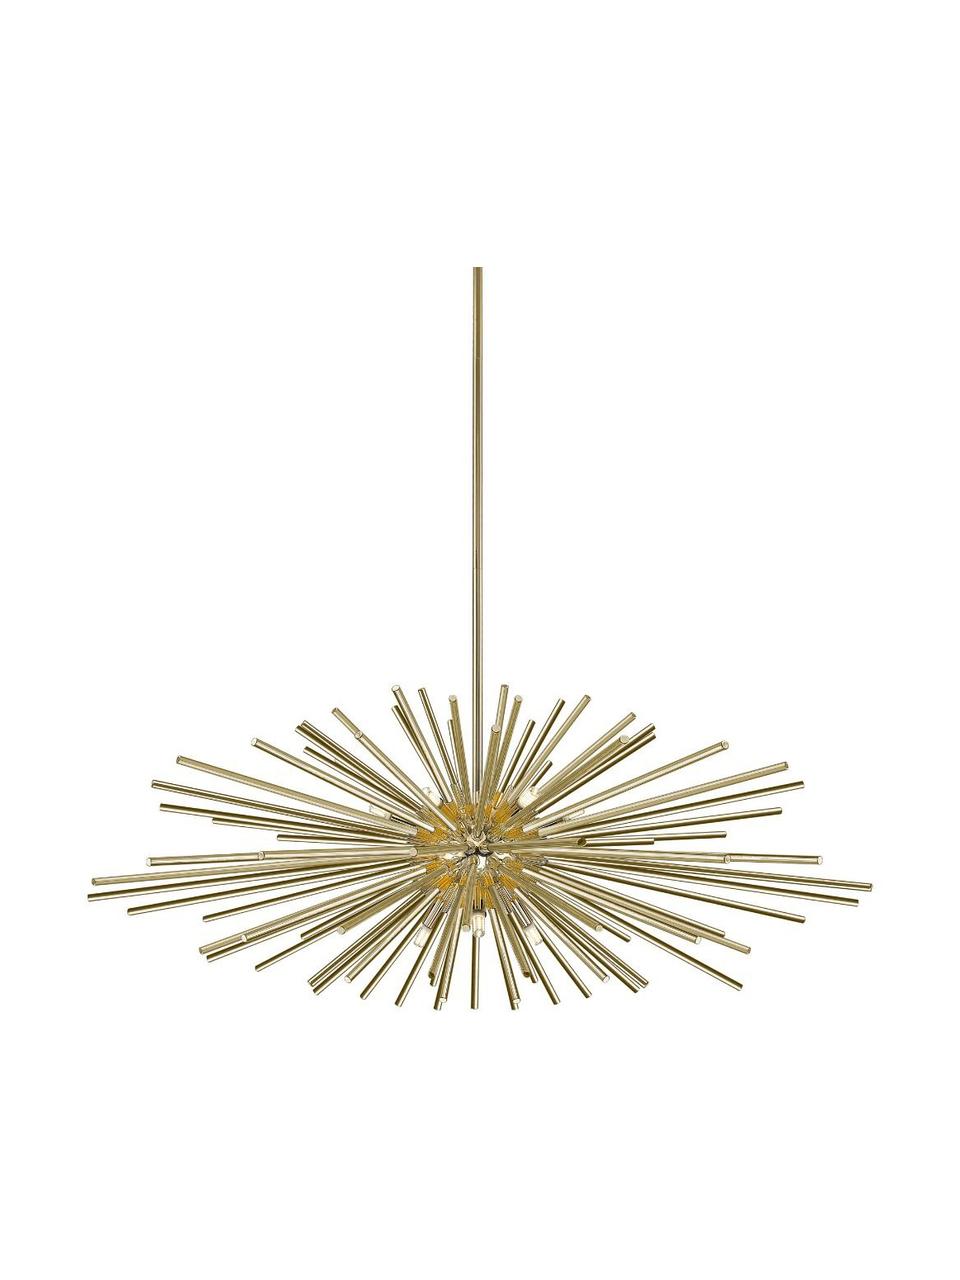 Grosse Design Pendelleuchte Urchin, Lampenschirm: Metall, gebürstet, Baldachin: Metall, gebürstet, Goldfarben, Ø 101 x H 50 cm